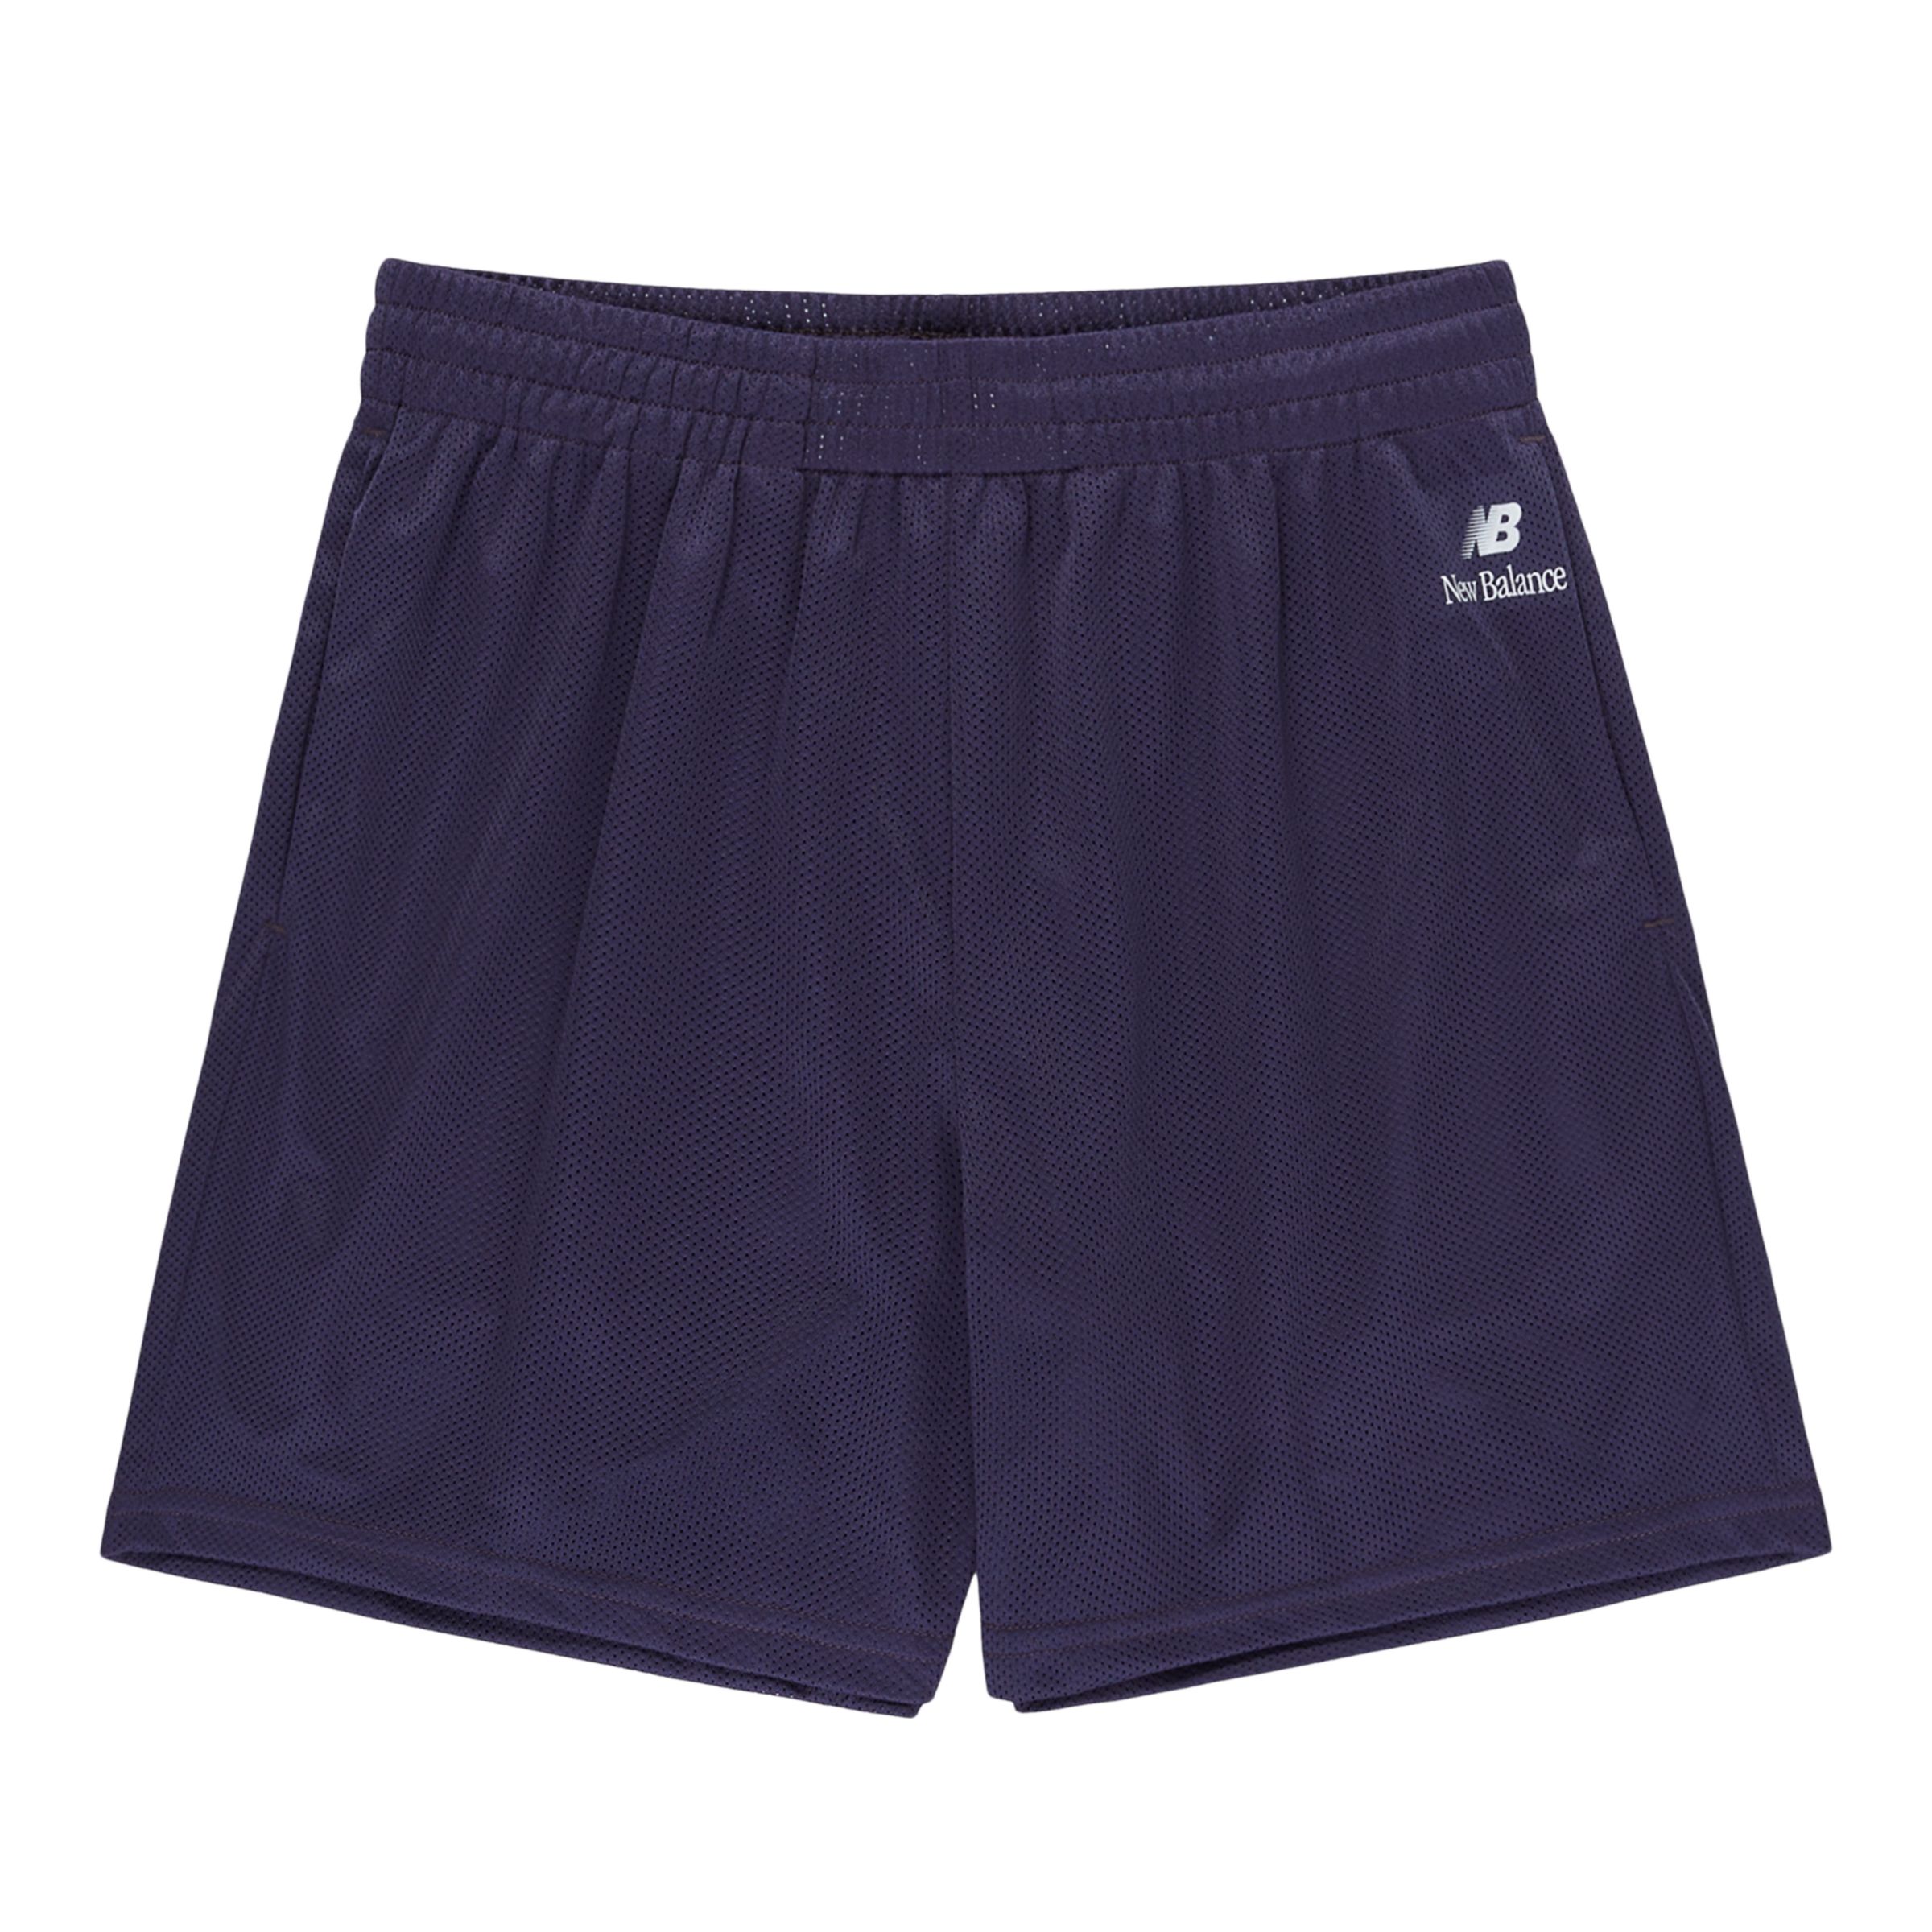 New Balance Men's Made in USA Mesh Short - Purple (Size M)